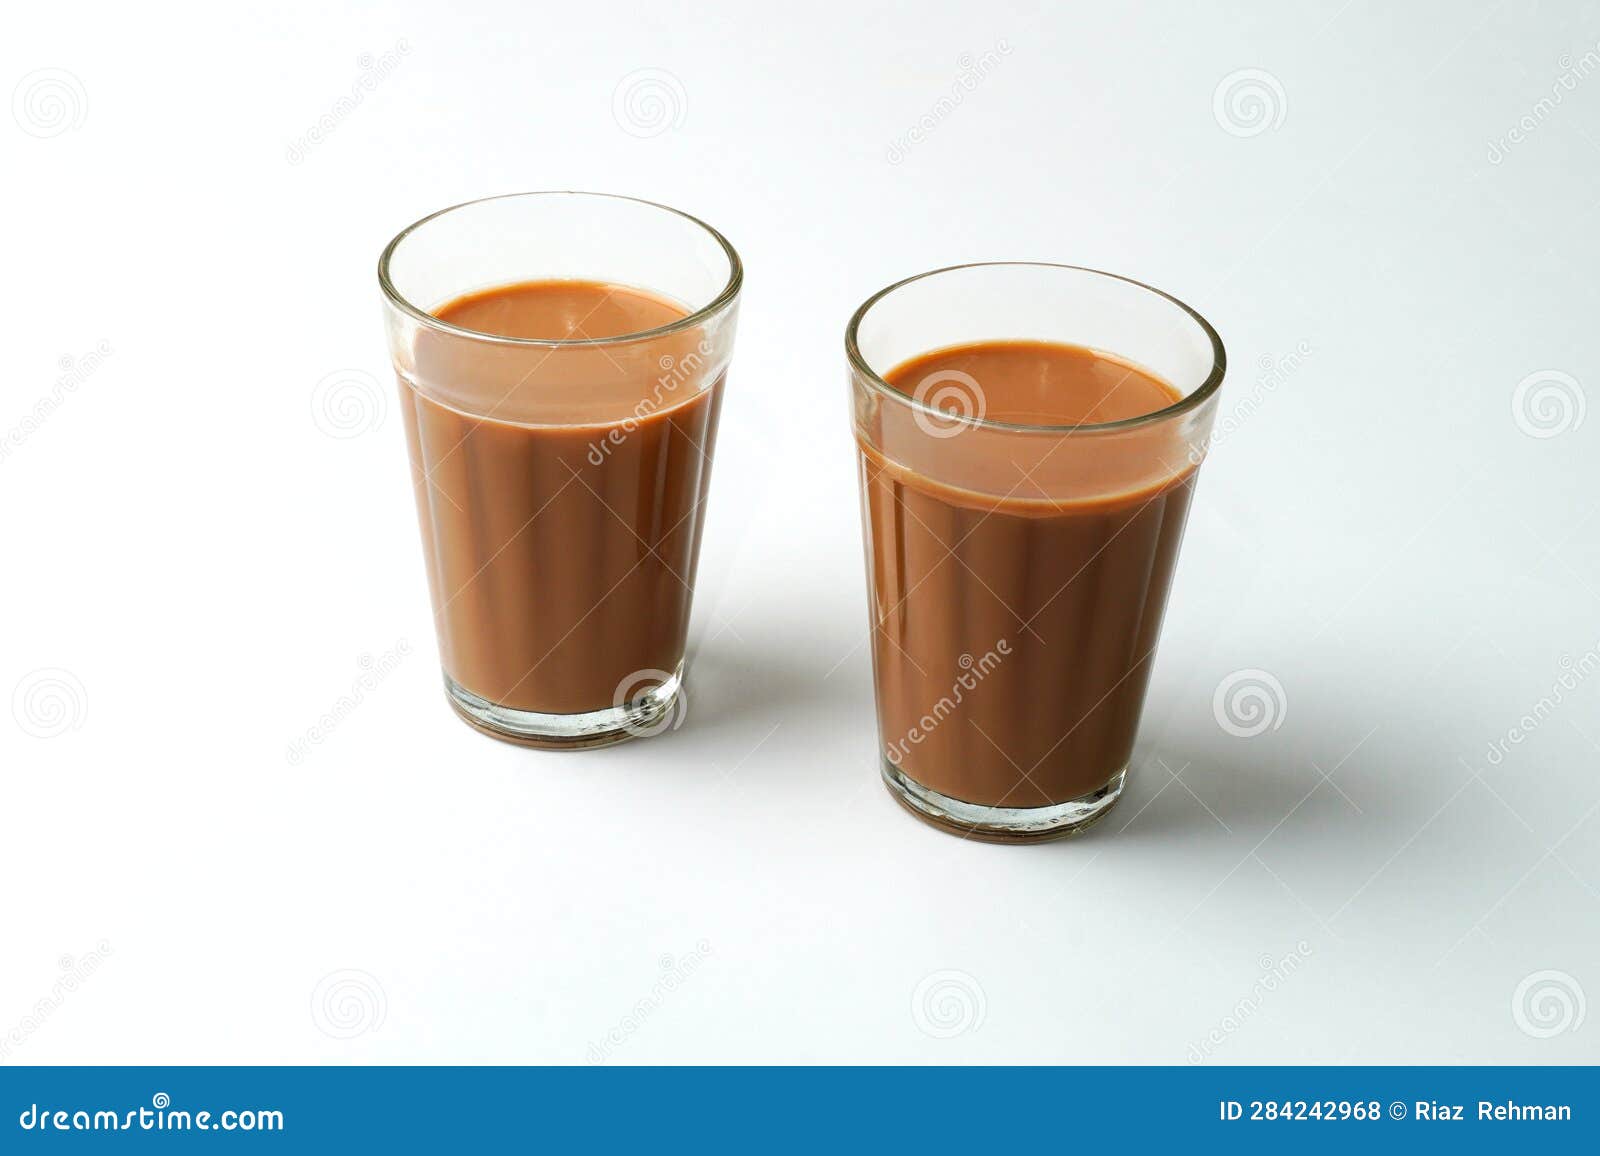 https://thumbs.dreamstime.com/z/glass-karak-milk-tea-chai-also-known-as-masala-simply-popular-beverage-originating-indian-subcontinent-made-284242968.jpg